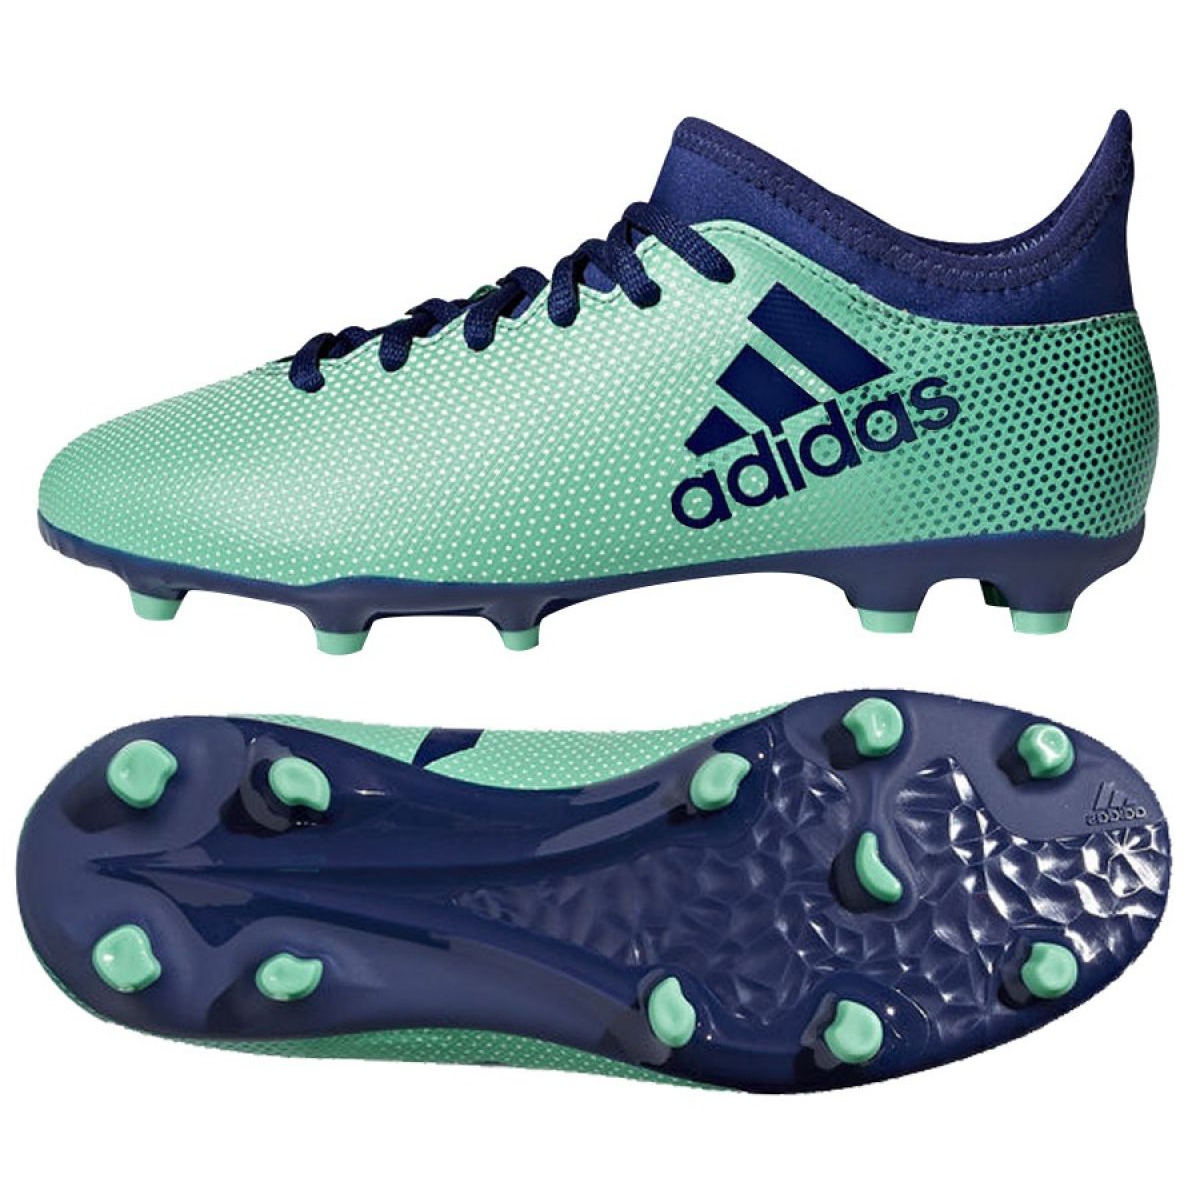 Adidas X Fg CP8993 football boots multicolored blue